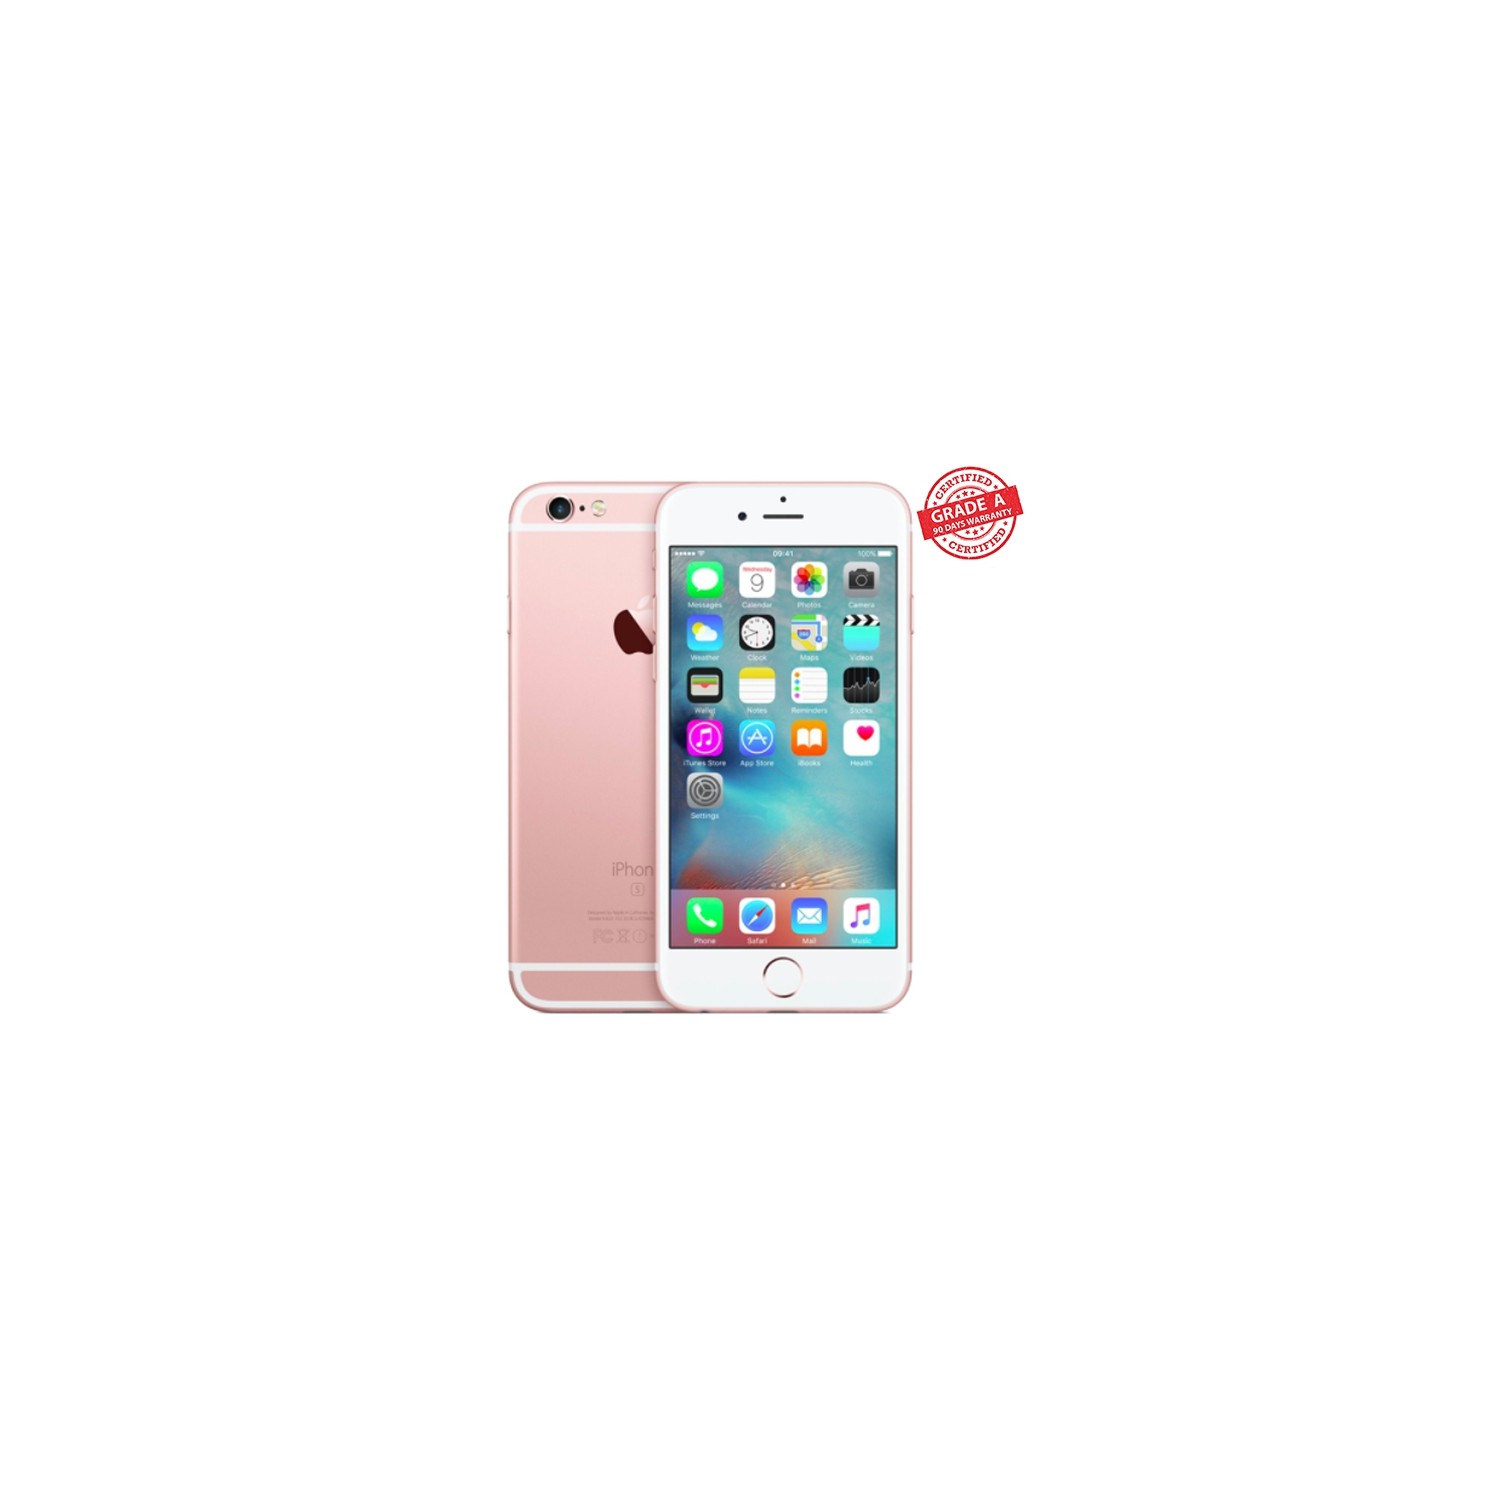 Refurbished (Good) - Apple iPhone 6S 16GB Smartphone - RoseGold - Unlocked - Grade A